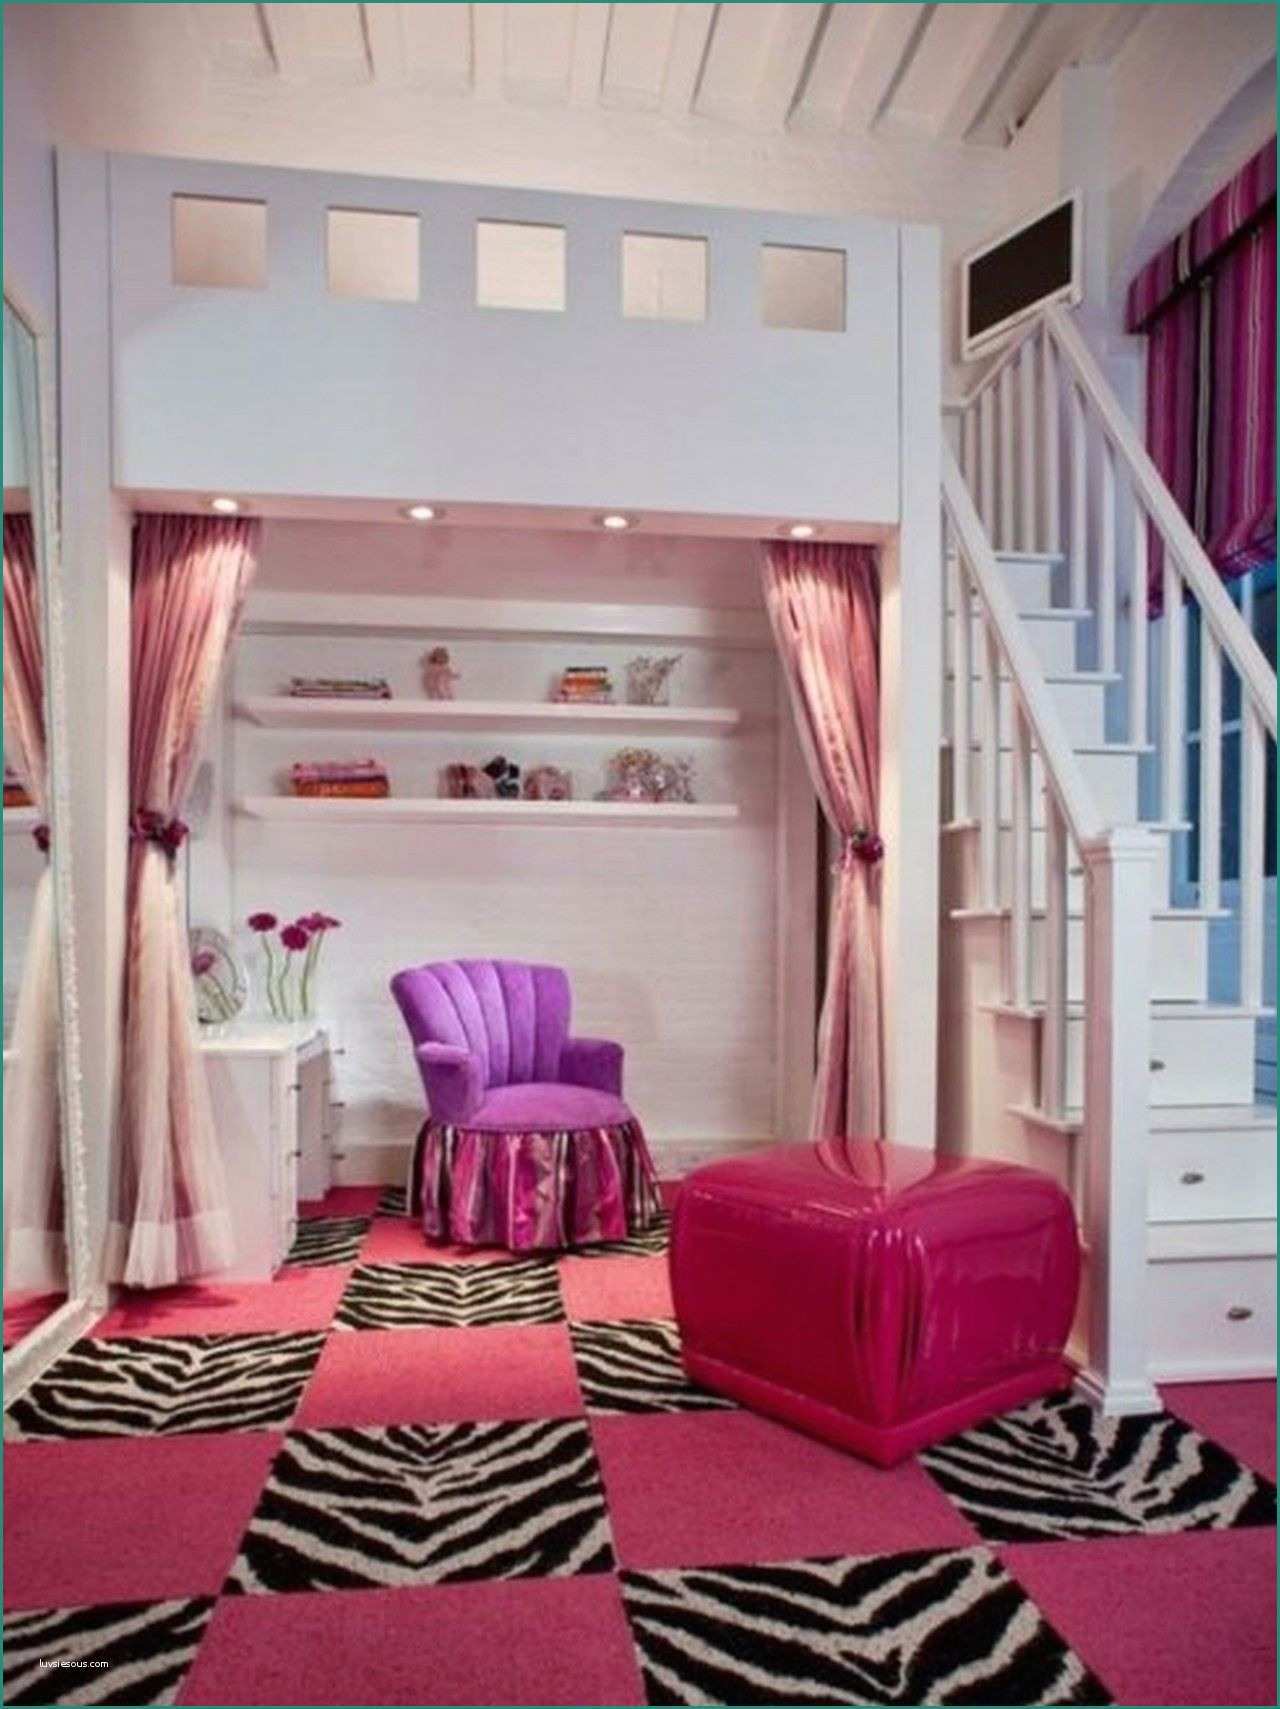 Casa Idea Stile E Awesome Bedroom Position Glamorous Bedroom themes Pretty